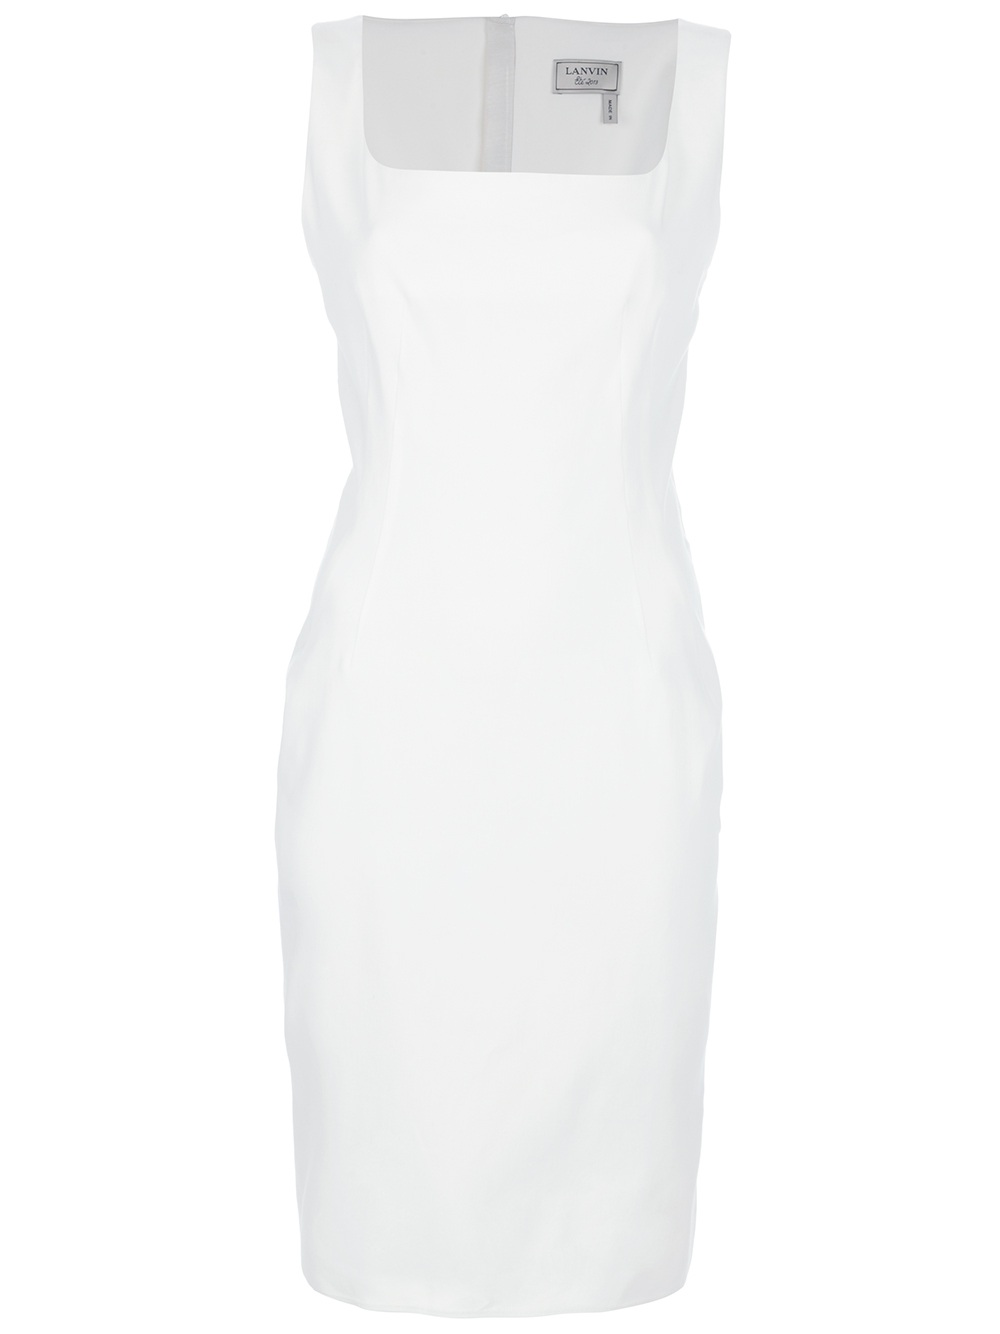 Lanvin Sleeveless Dress in White | Lyst